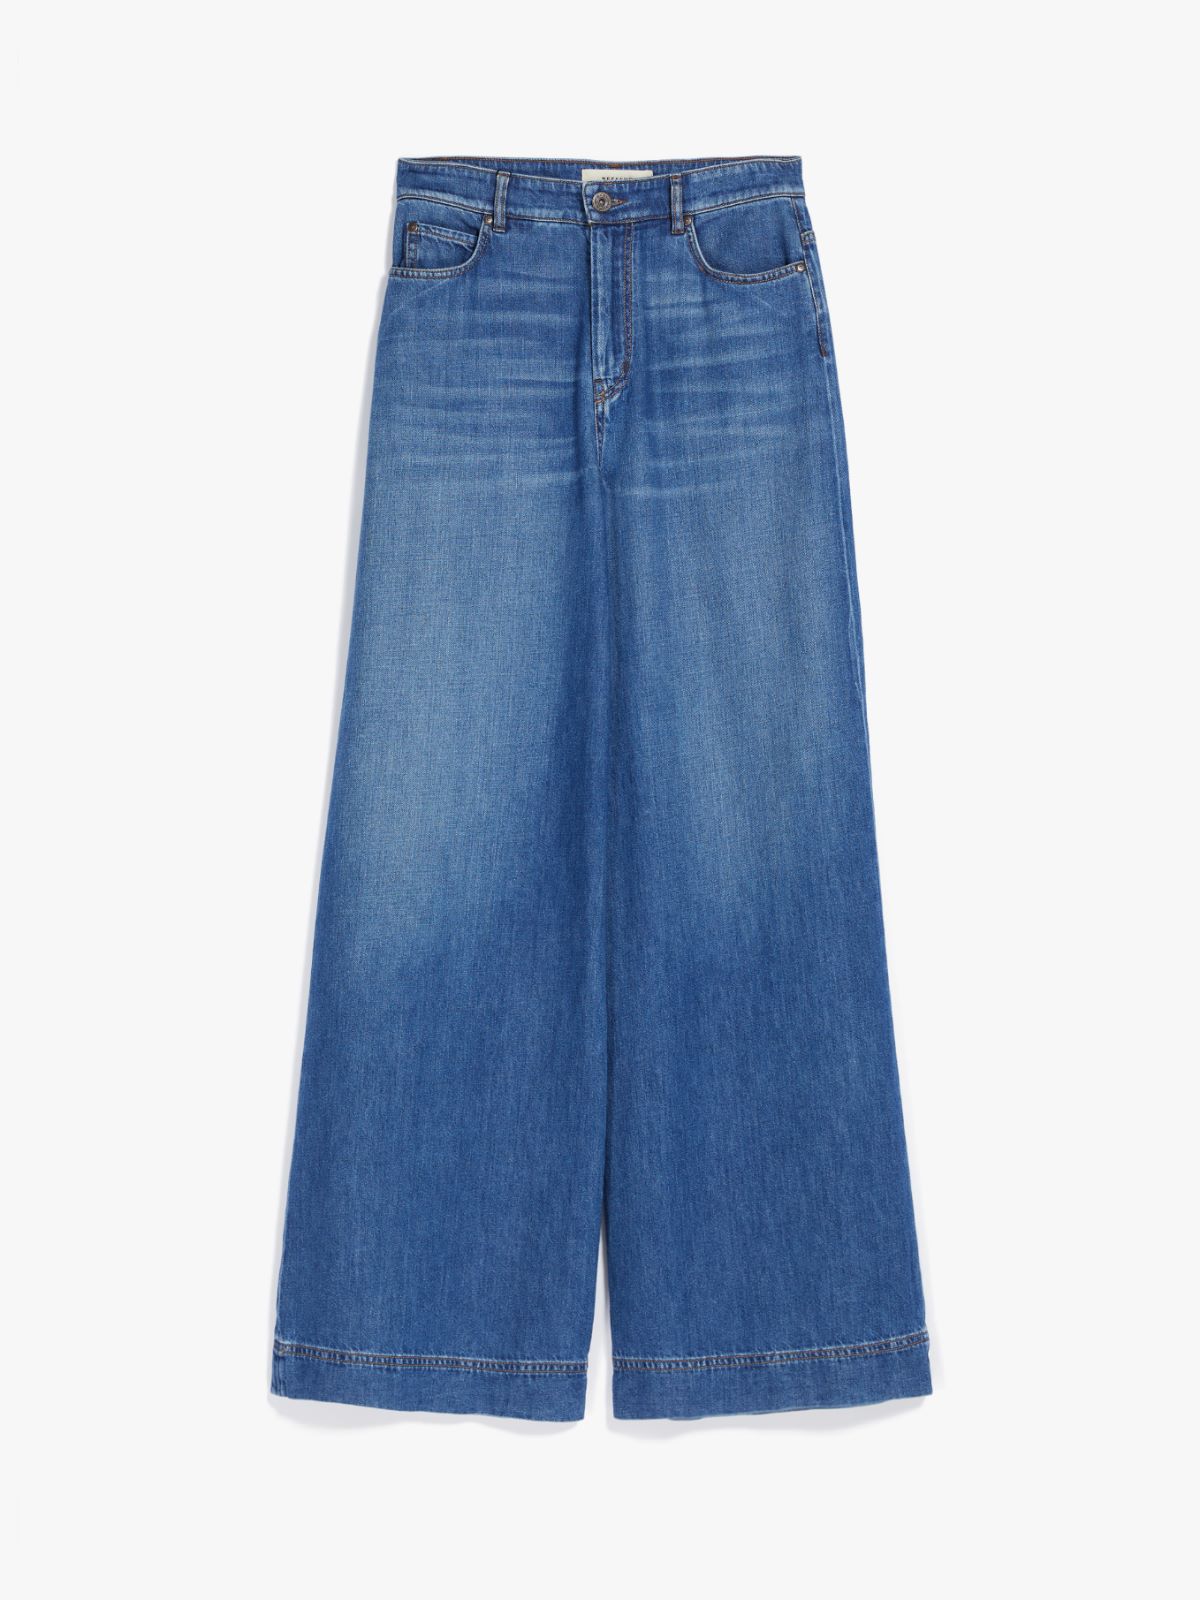 Jeans in organic cotton denim - NAVY - Weekend Max Mara - 5